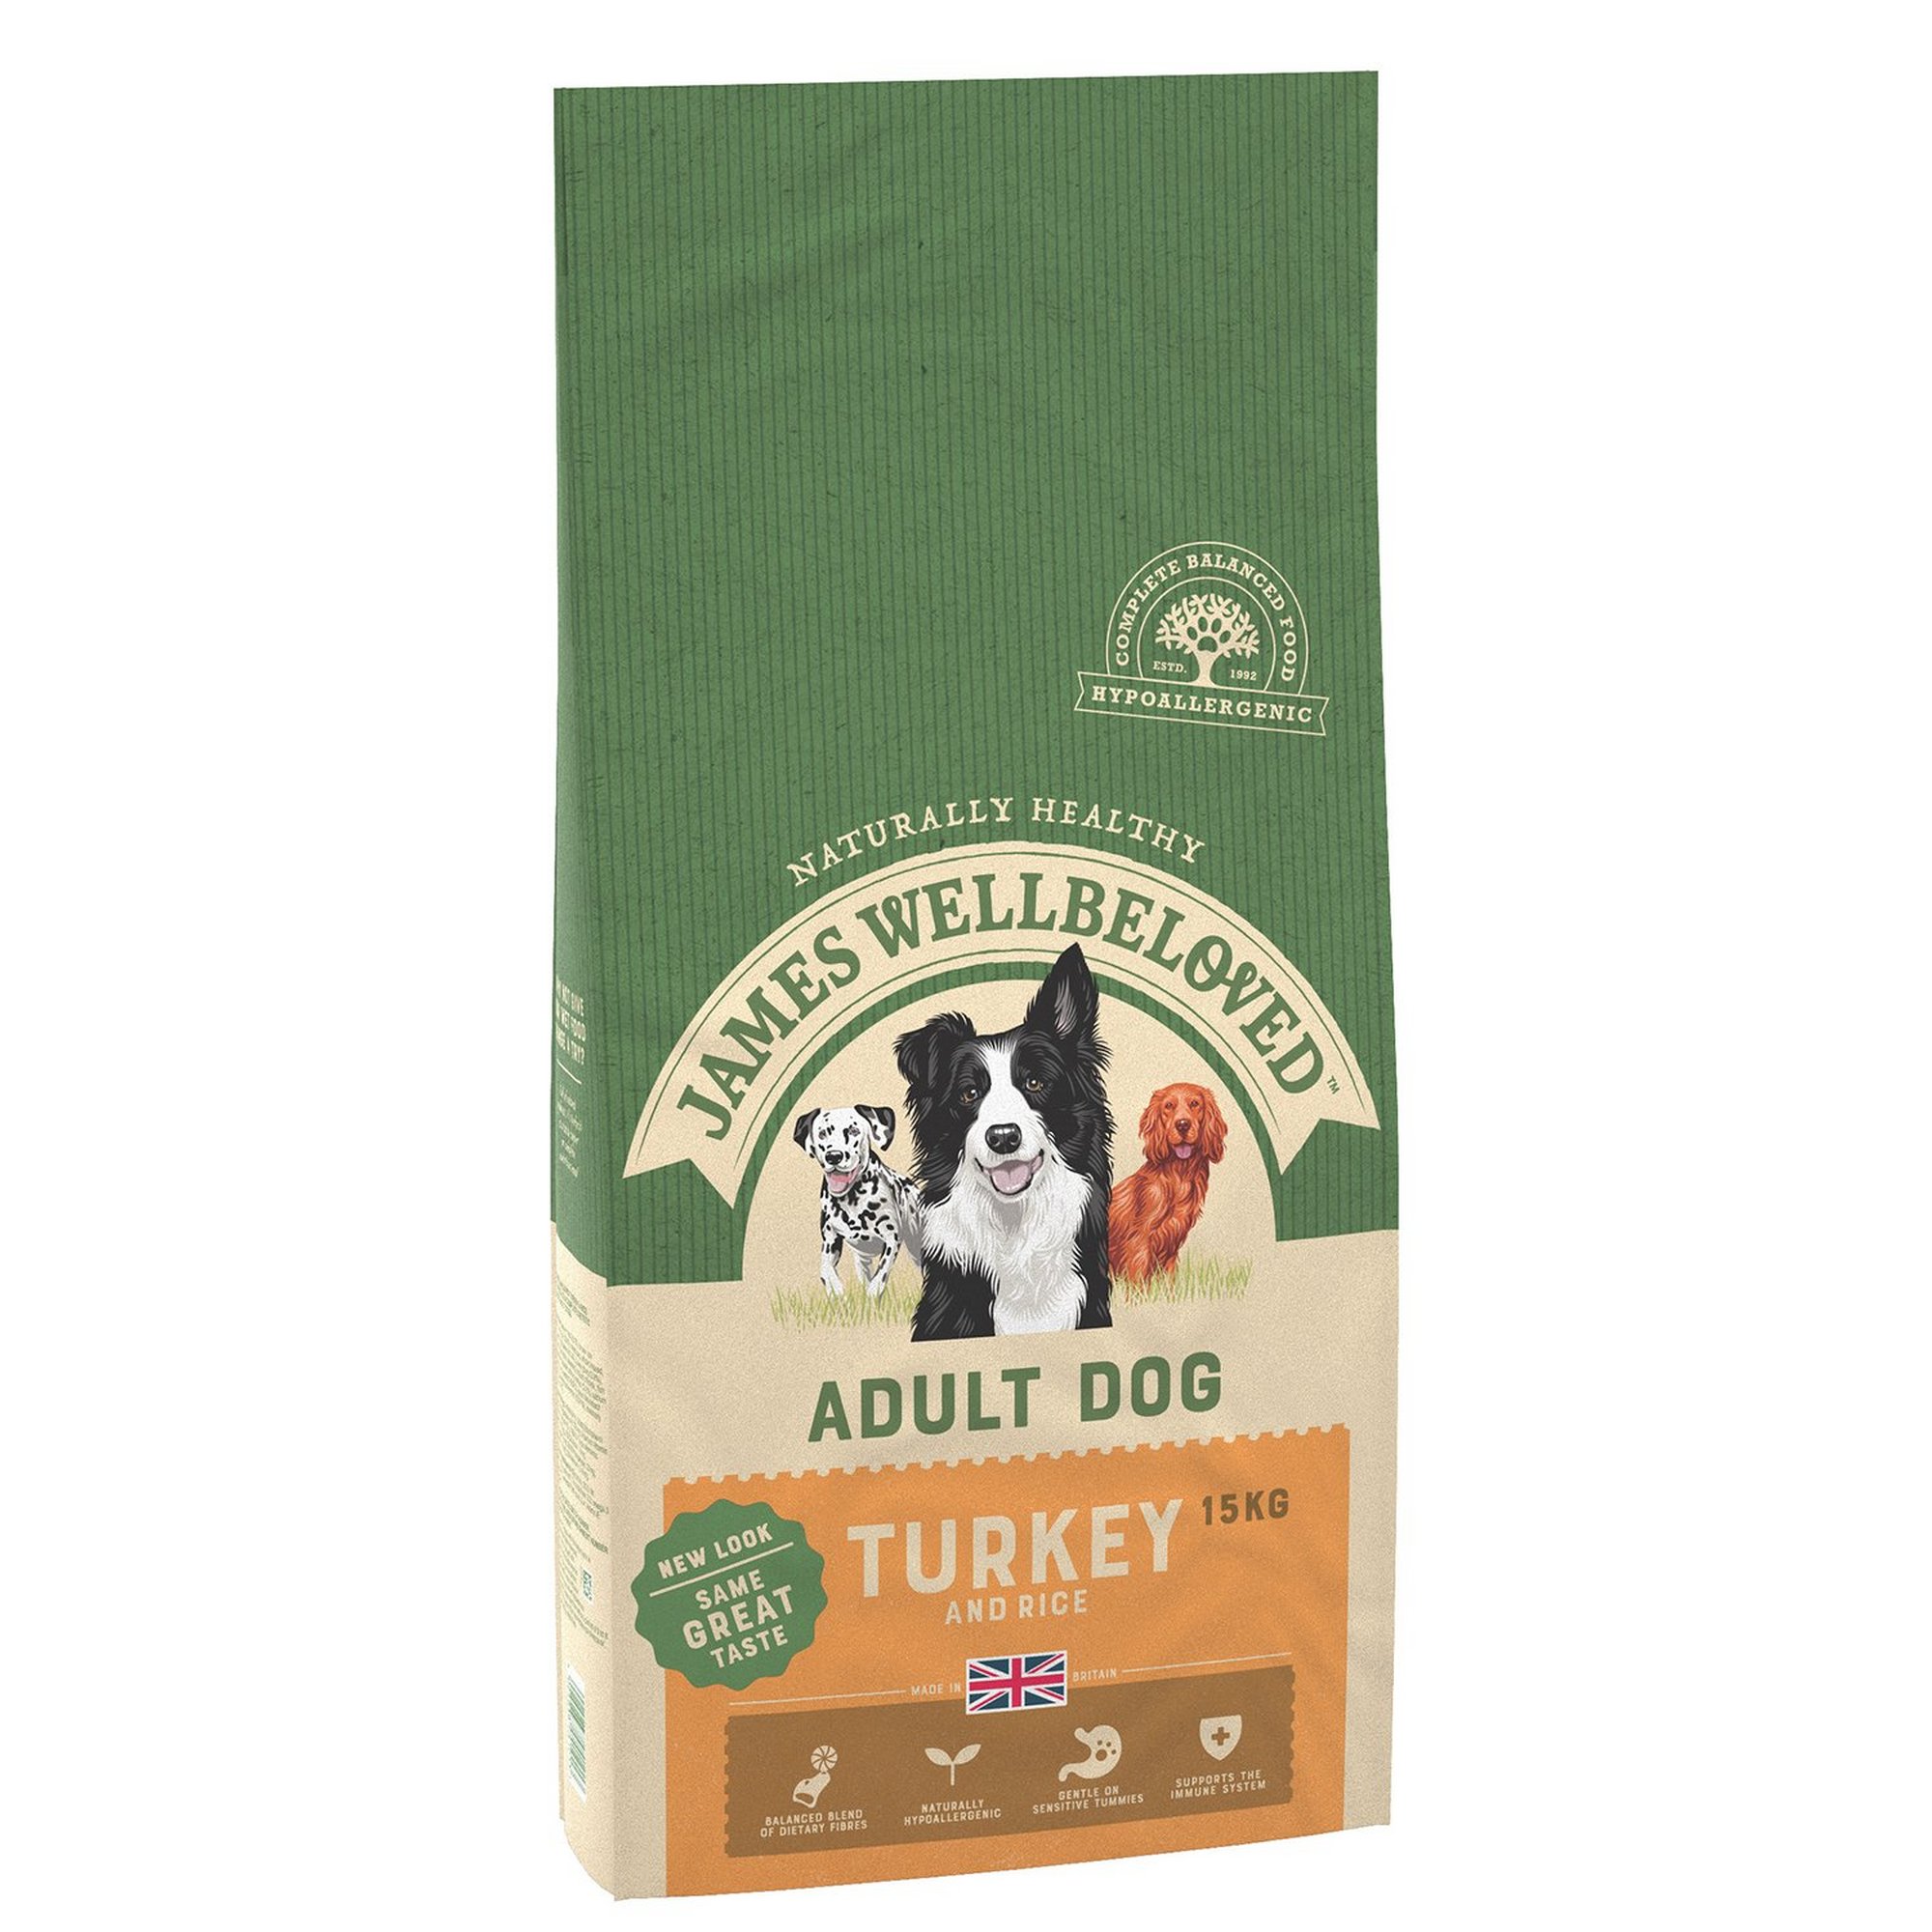 Studio James Wellbeloved Adult Dog Maintenance Turkey and Rice Kibble 15kg